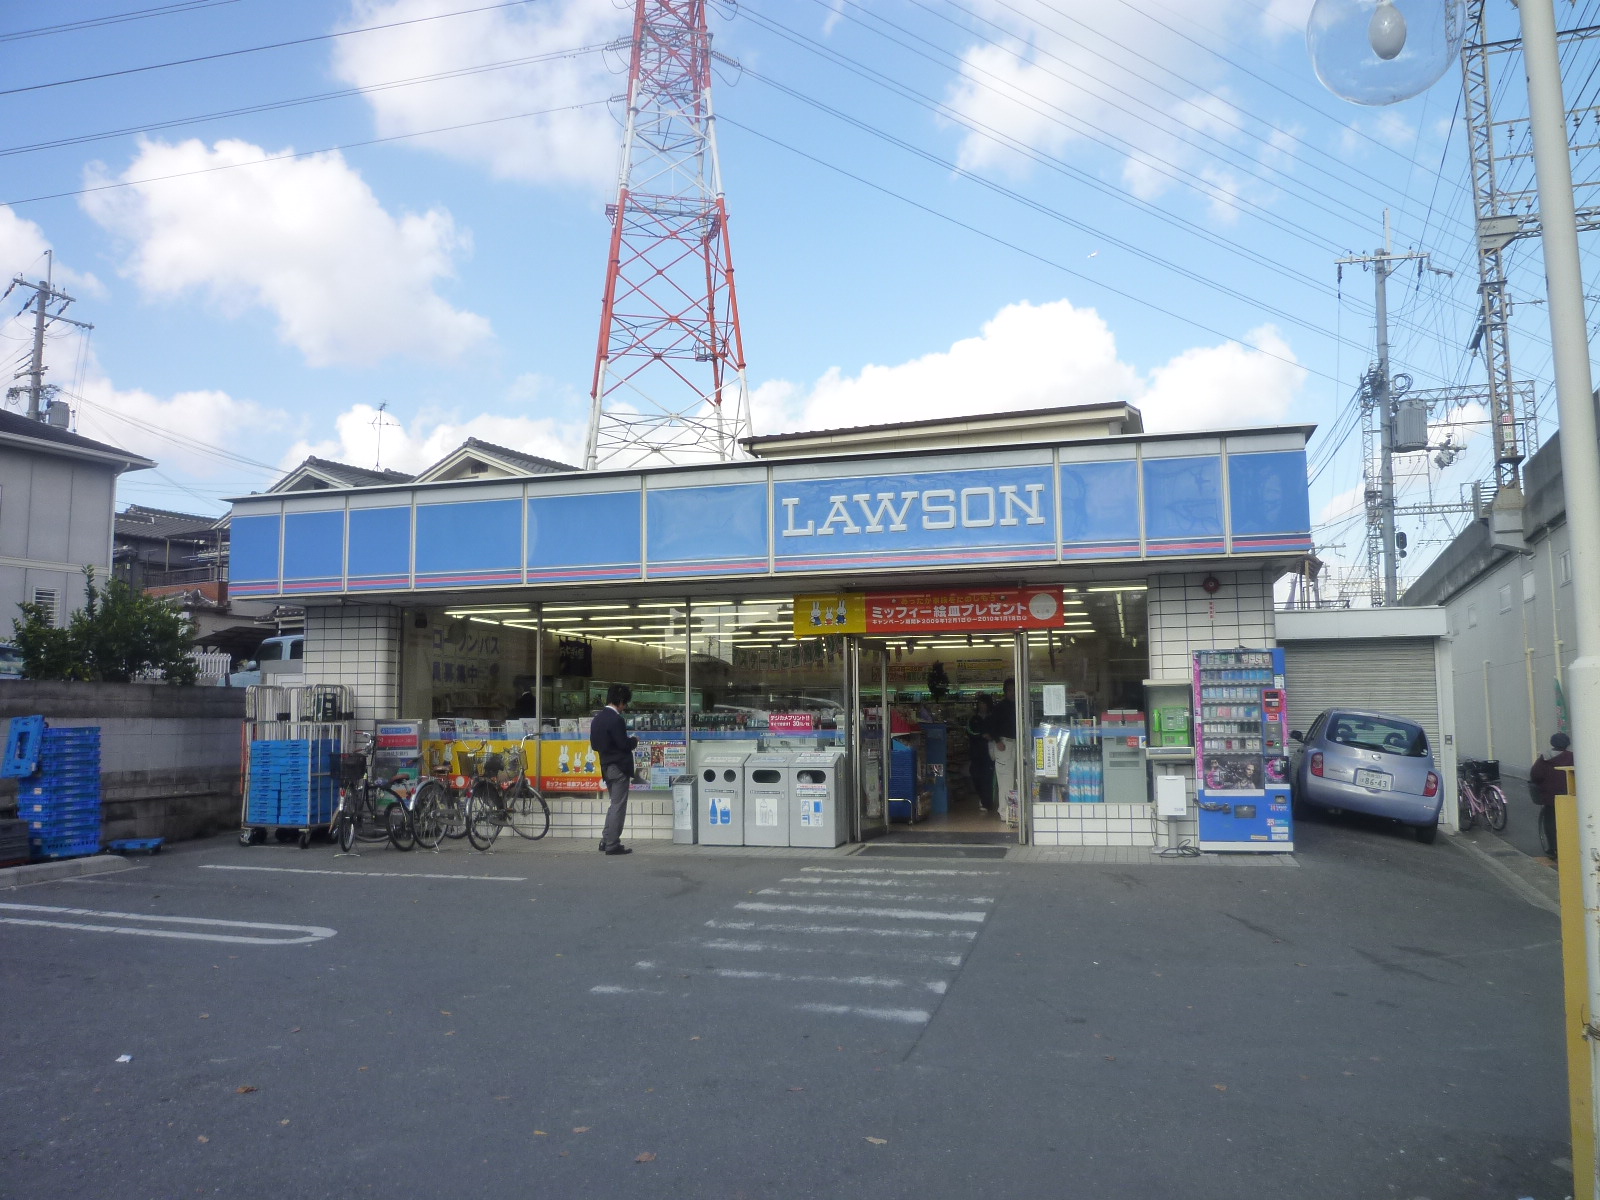 Convenience store. 930m until Lawson Yao Onjikita the town store (convenience store)